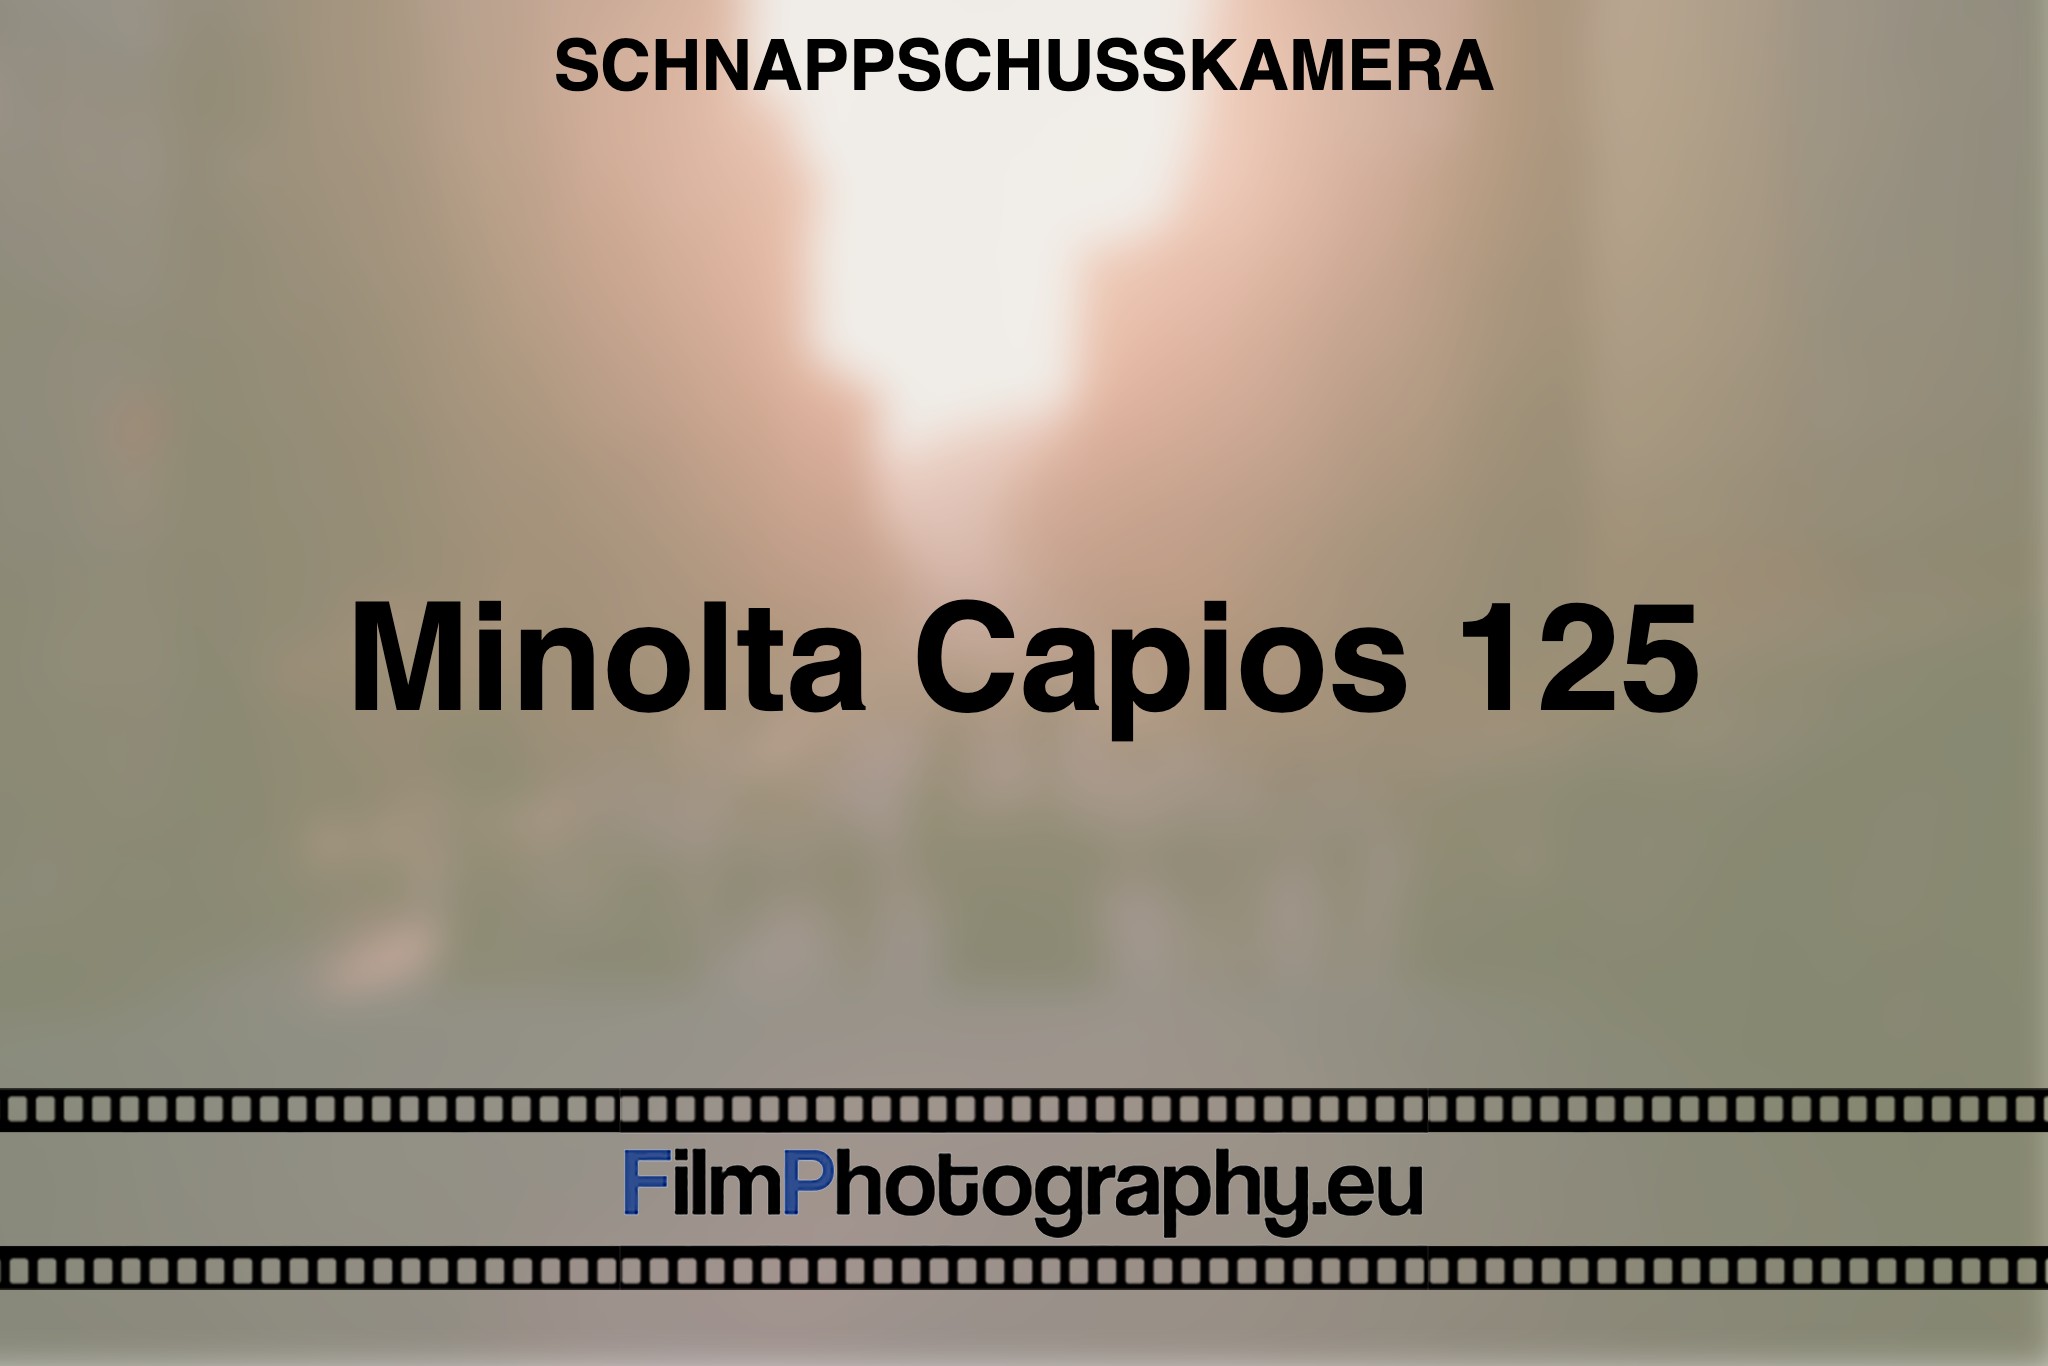 minolta-capios-125-schnappschusskamera-bnv